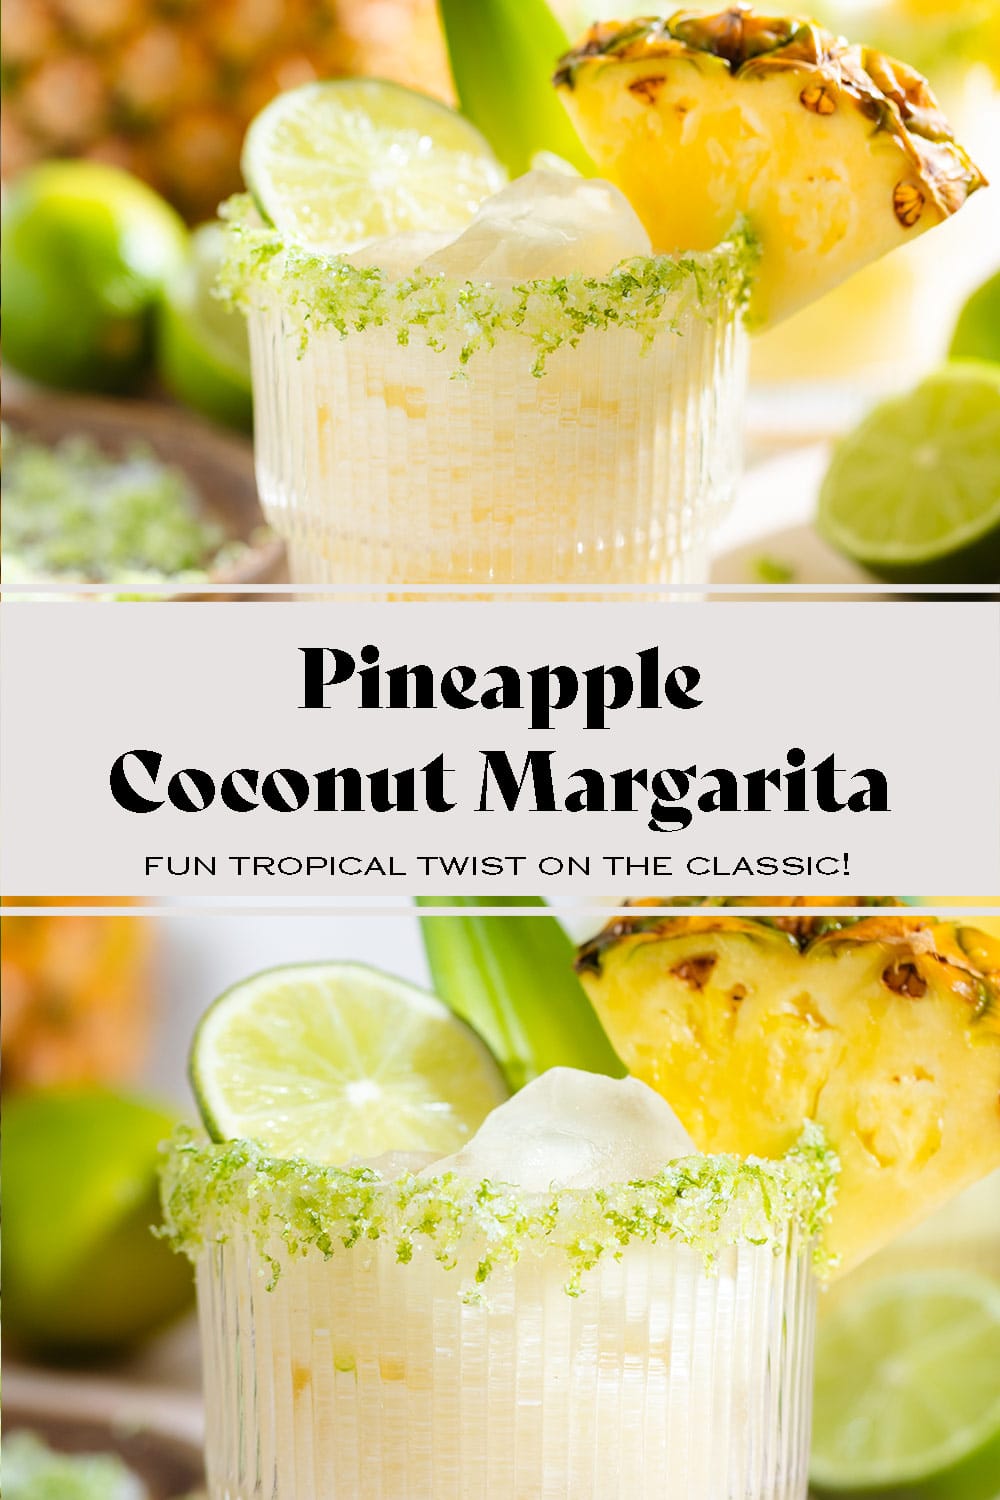 Pineapple Coconut Margarita